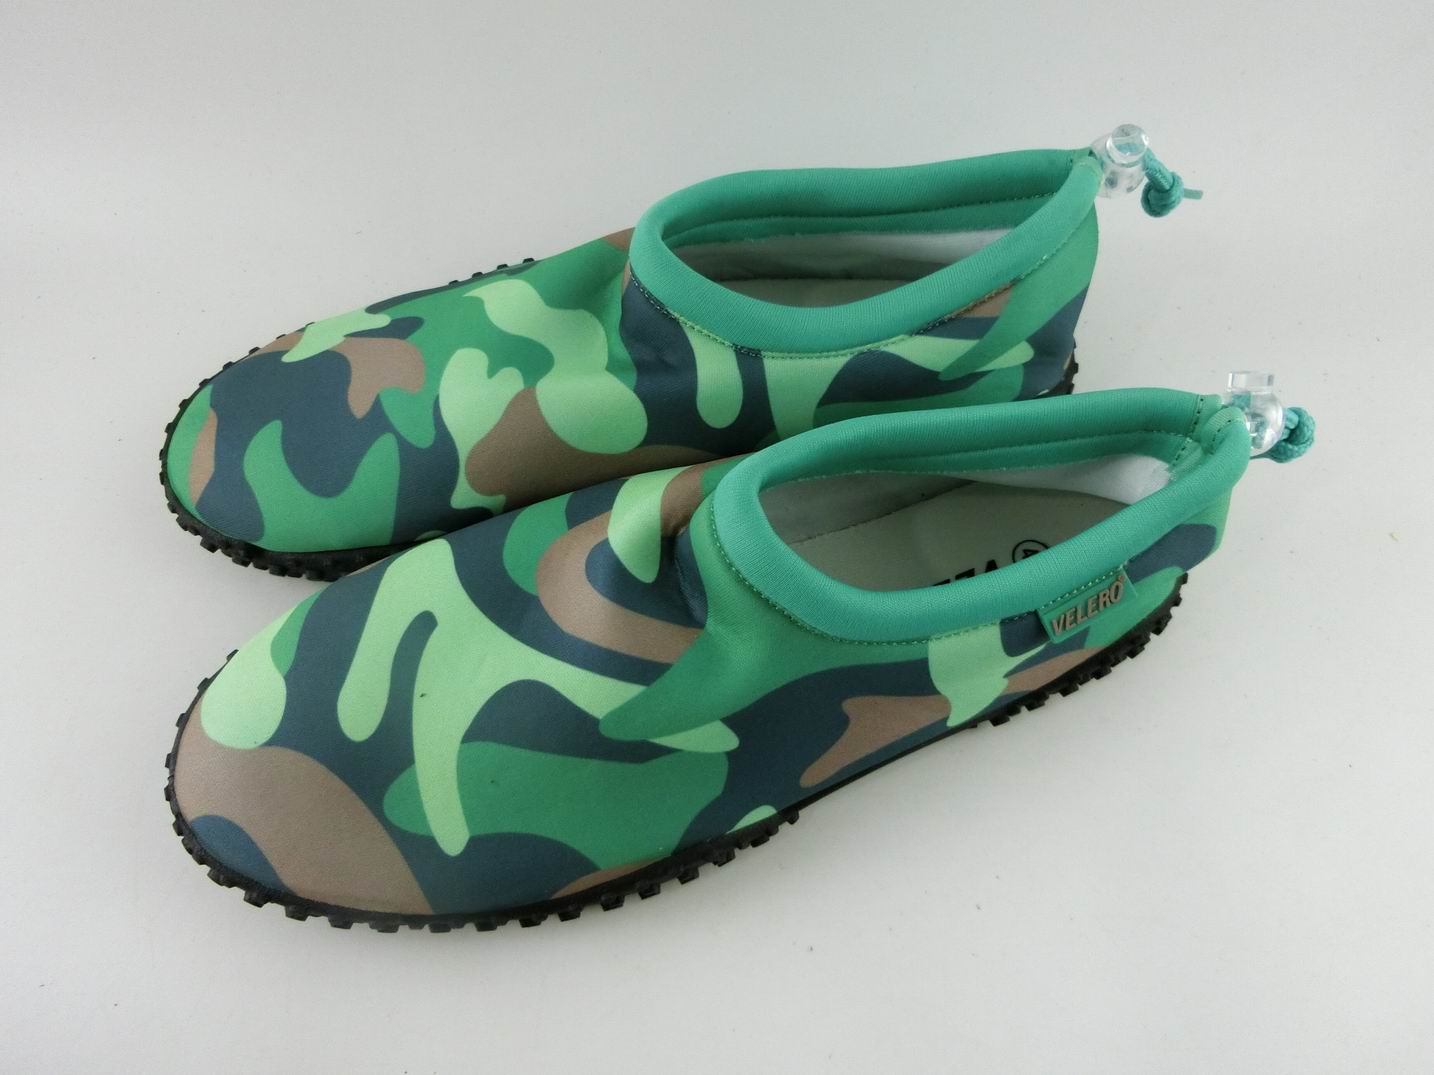 New fashion men aqua shoes